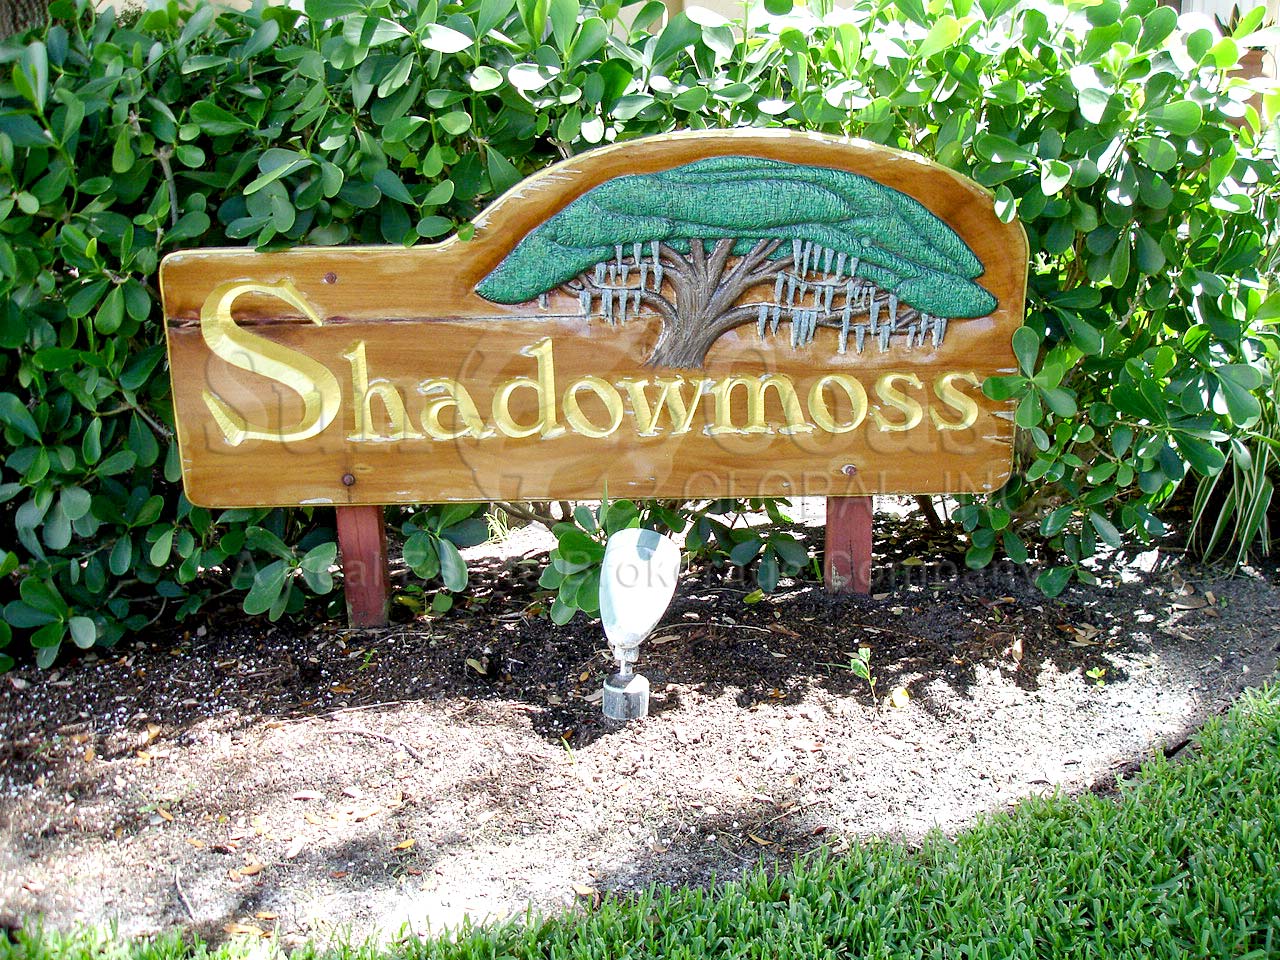 Shadowmoss Signage